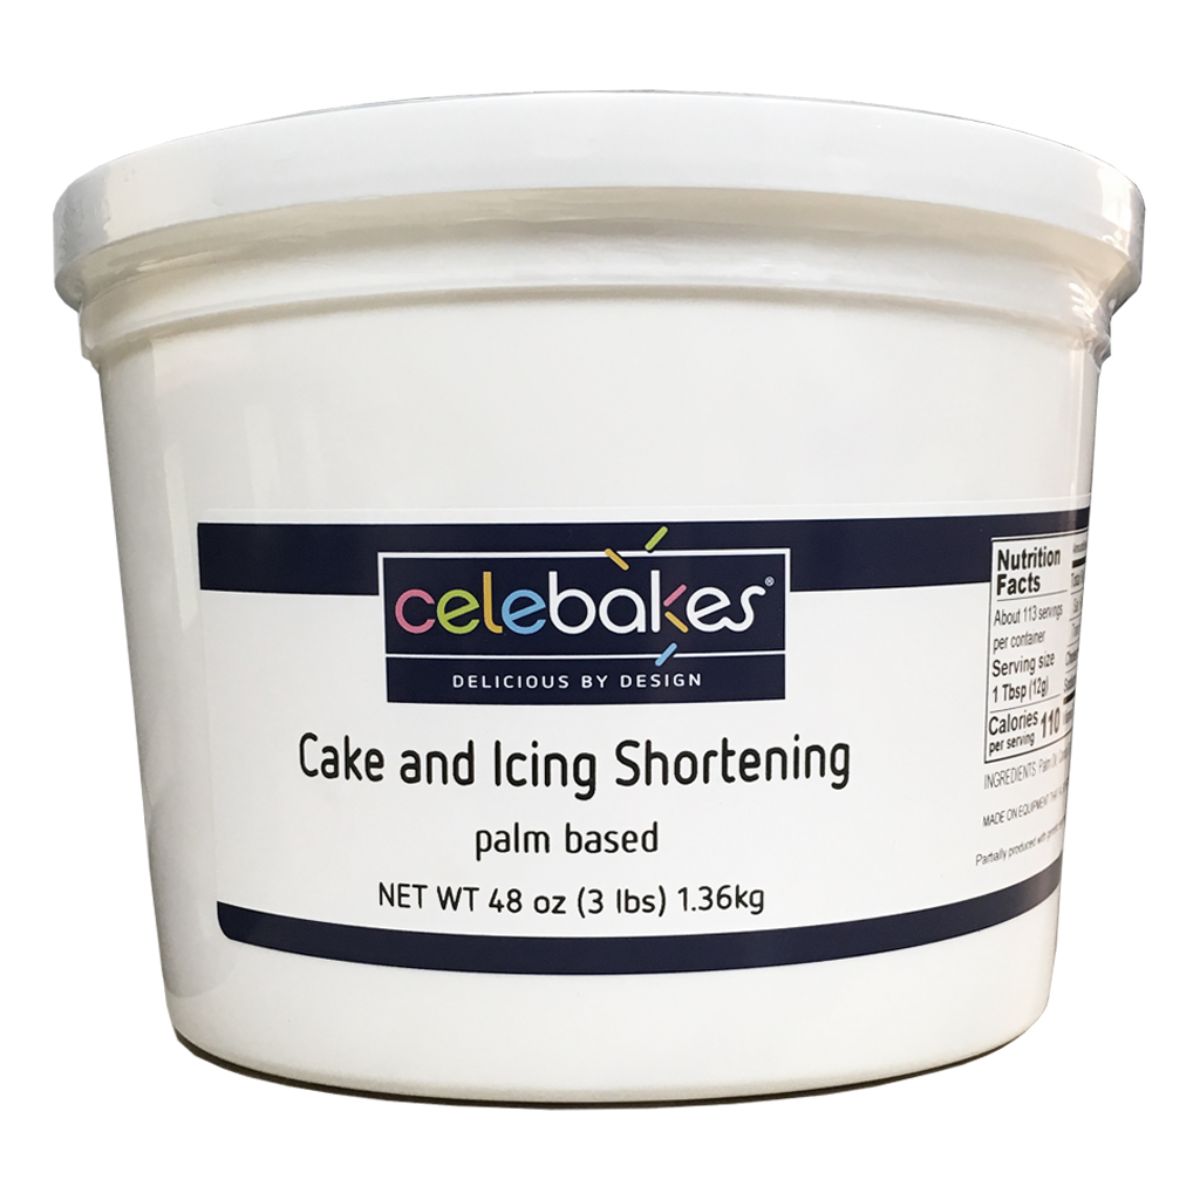 CK Cake & Icing Shortening, Palm Based 3lb